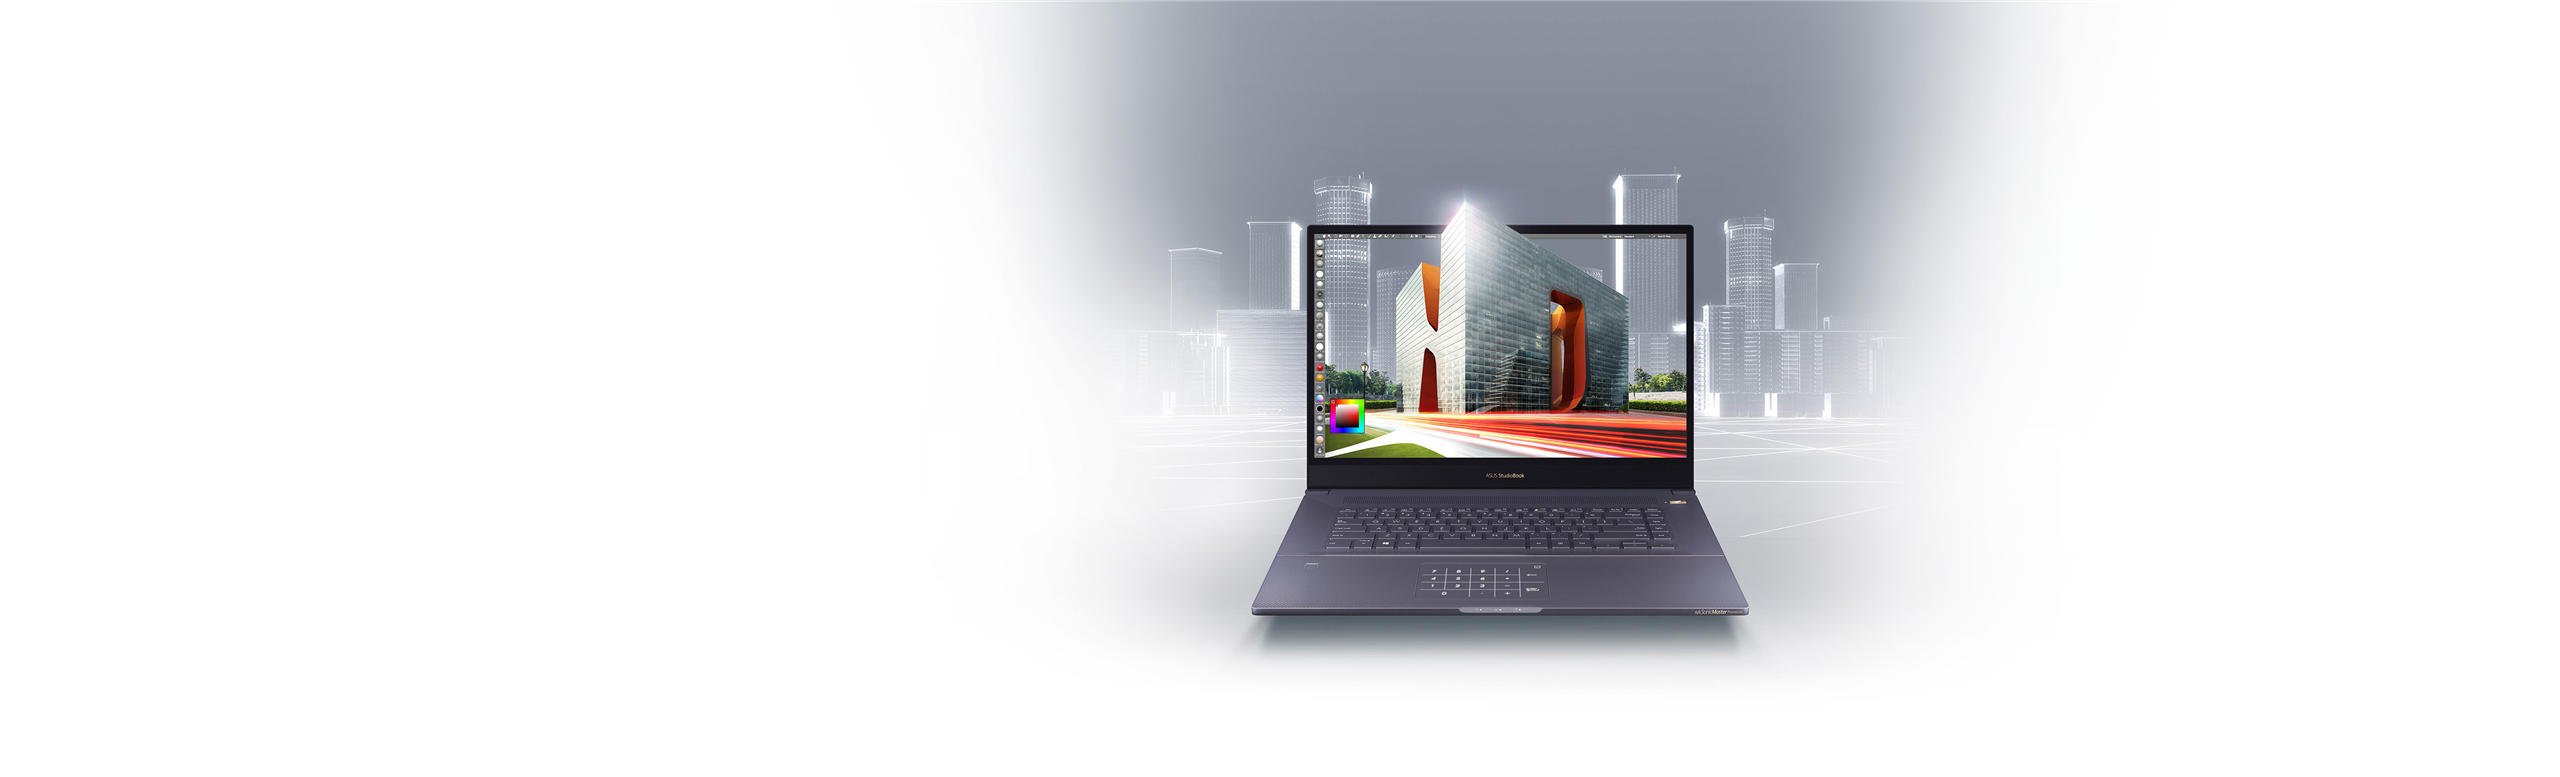 ProArt-StudioBook-Pro-X-W730